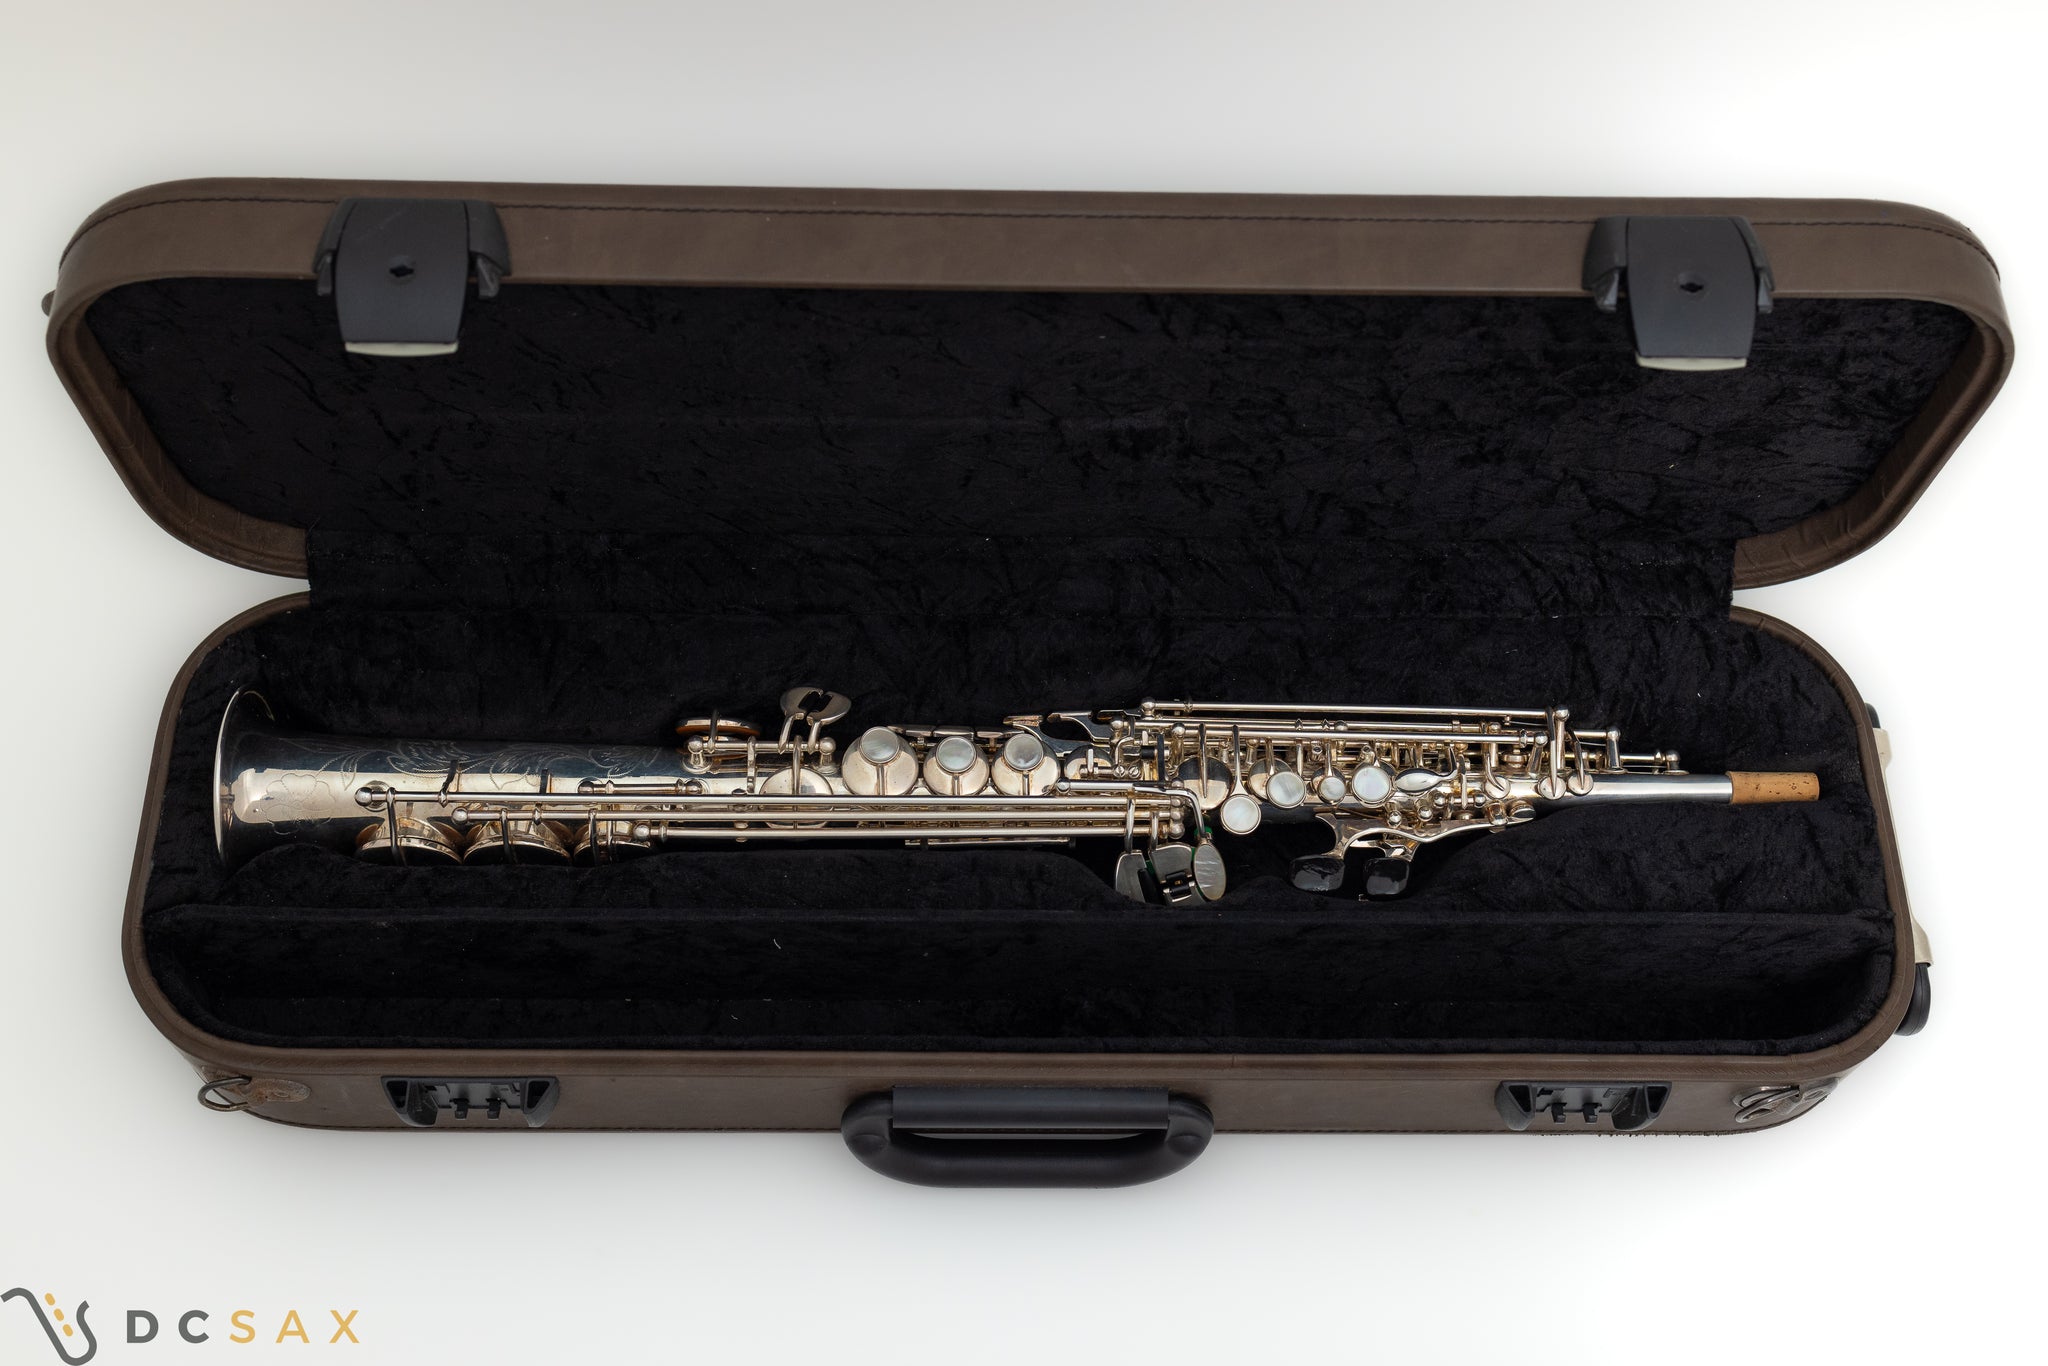 Rampone and Cazzani R1 Soprano Saxophone, Silver Plated, Near Mint, Video